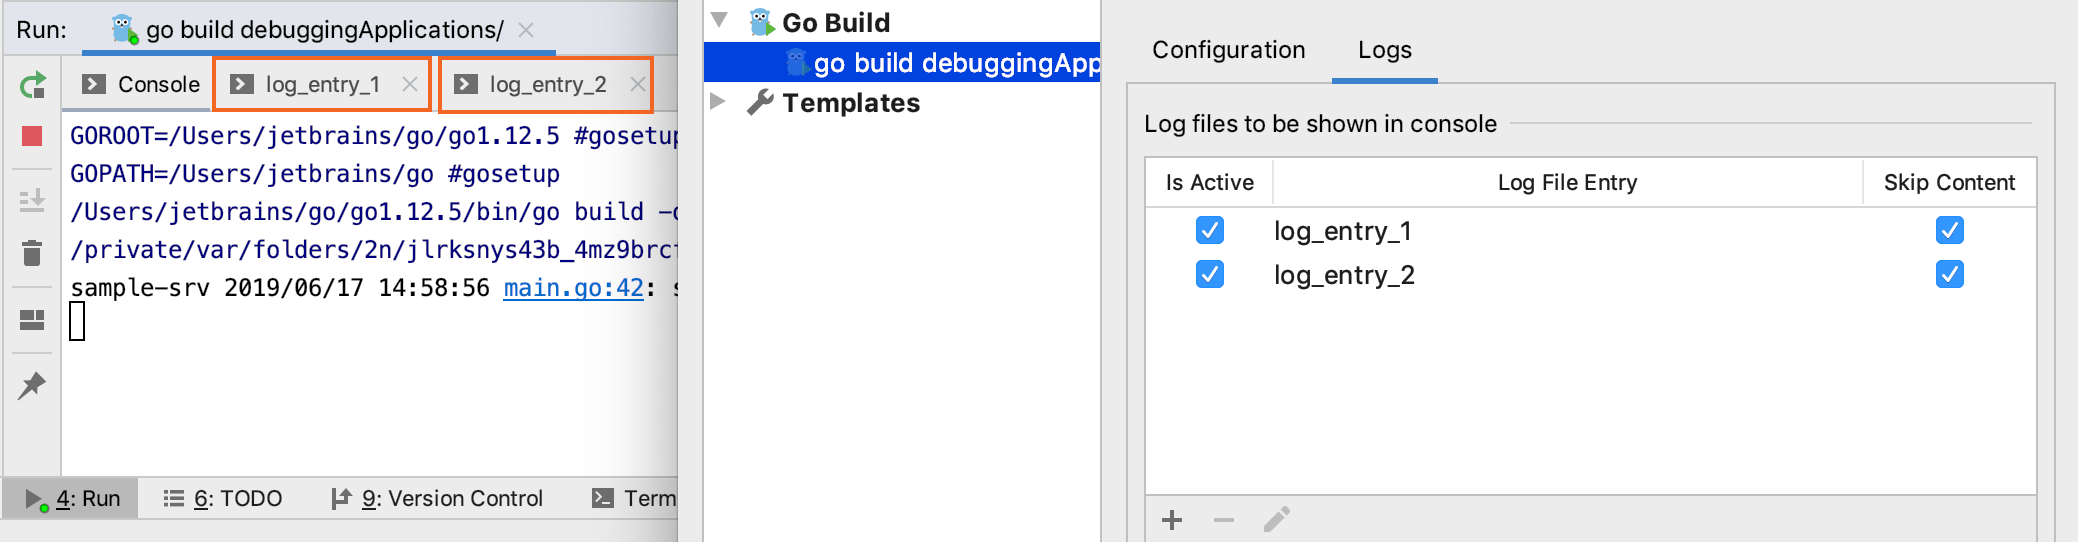 Configure log entries